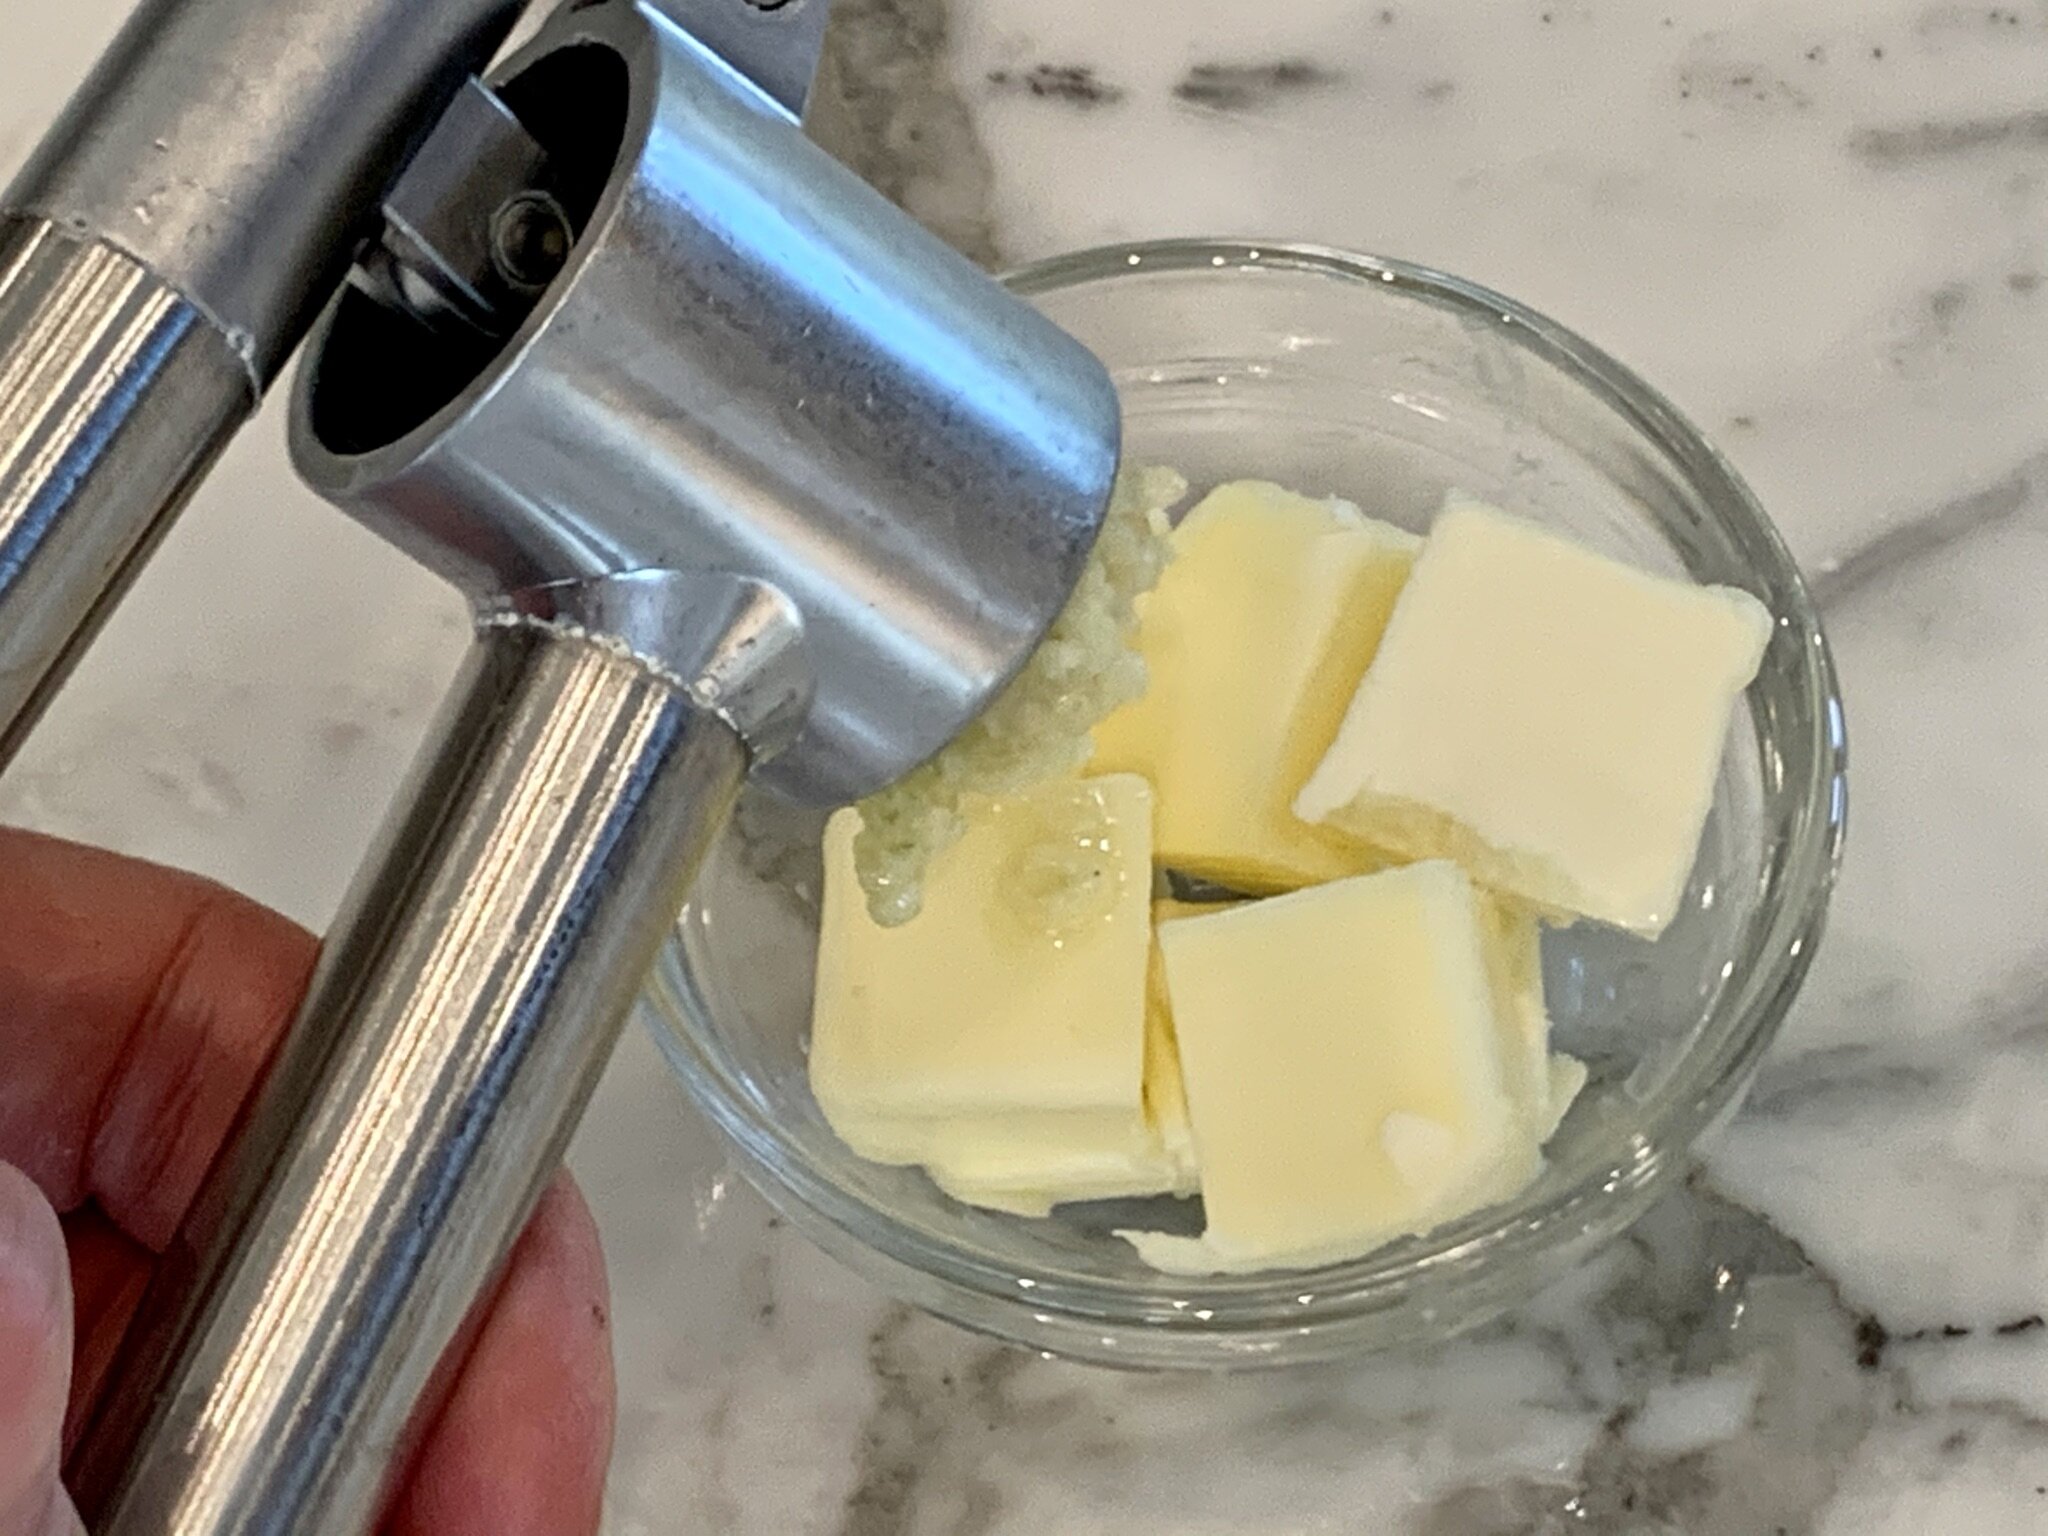 b) Press into butter